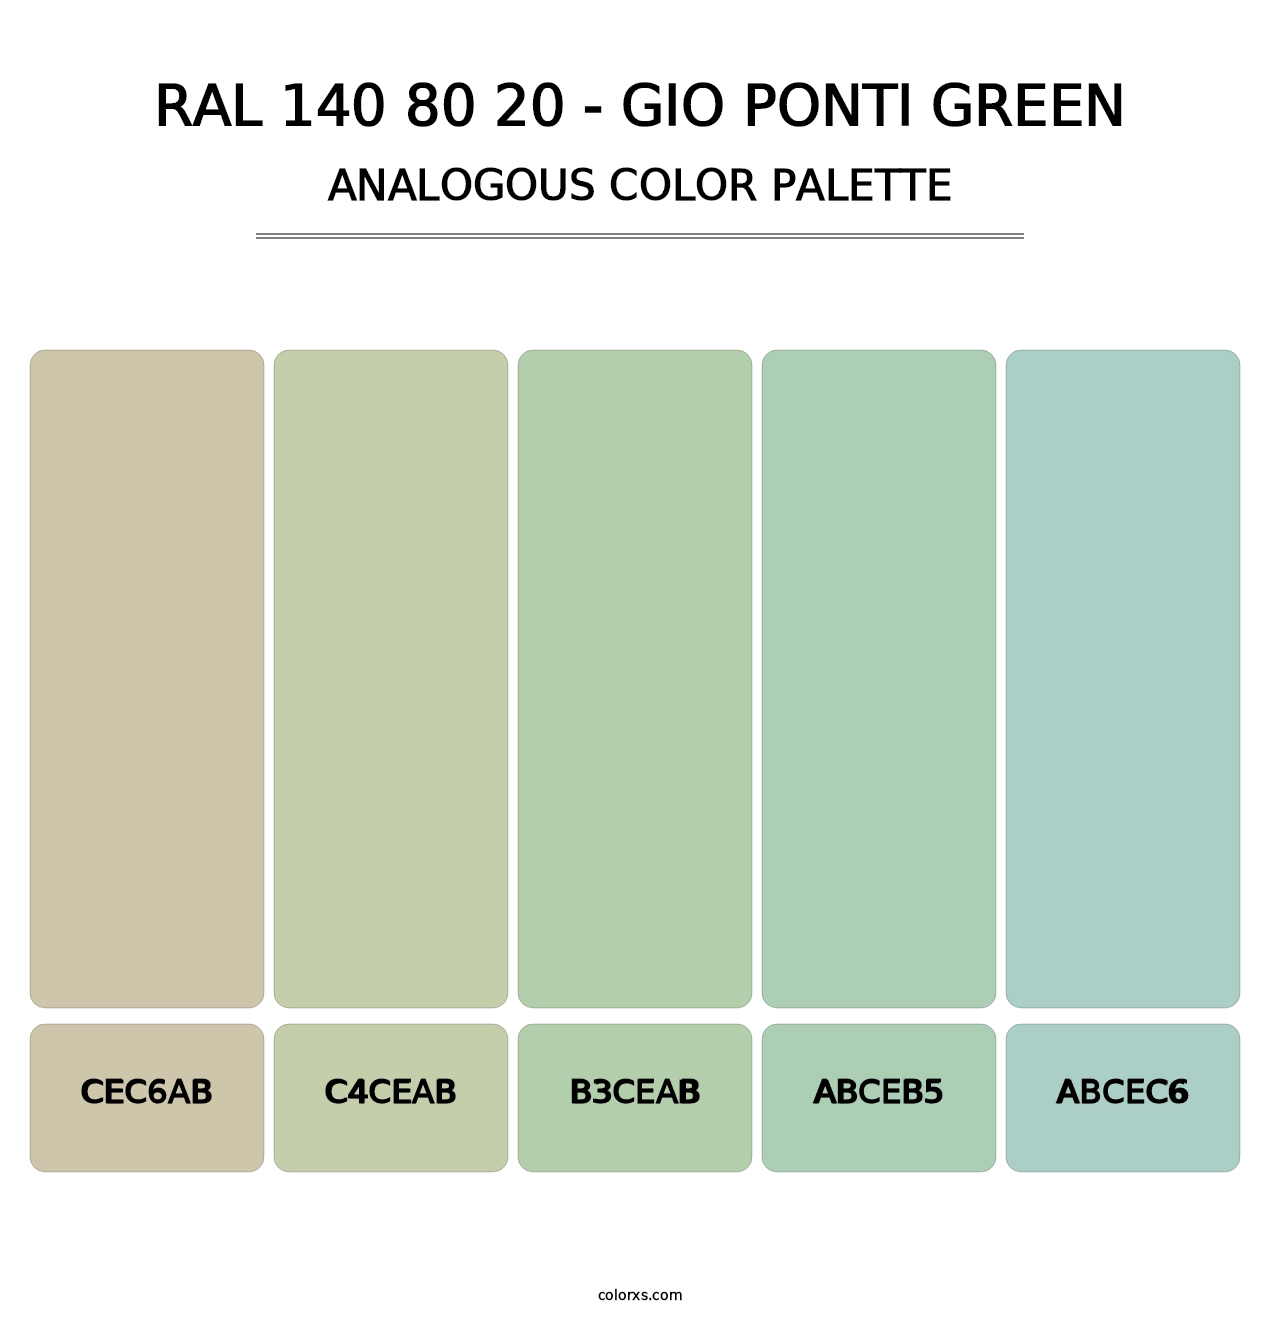 RAL 140 80 20 - Gio Ponti Green - Analogous Color Palette